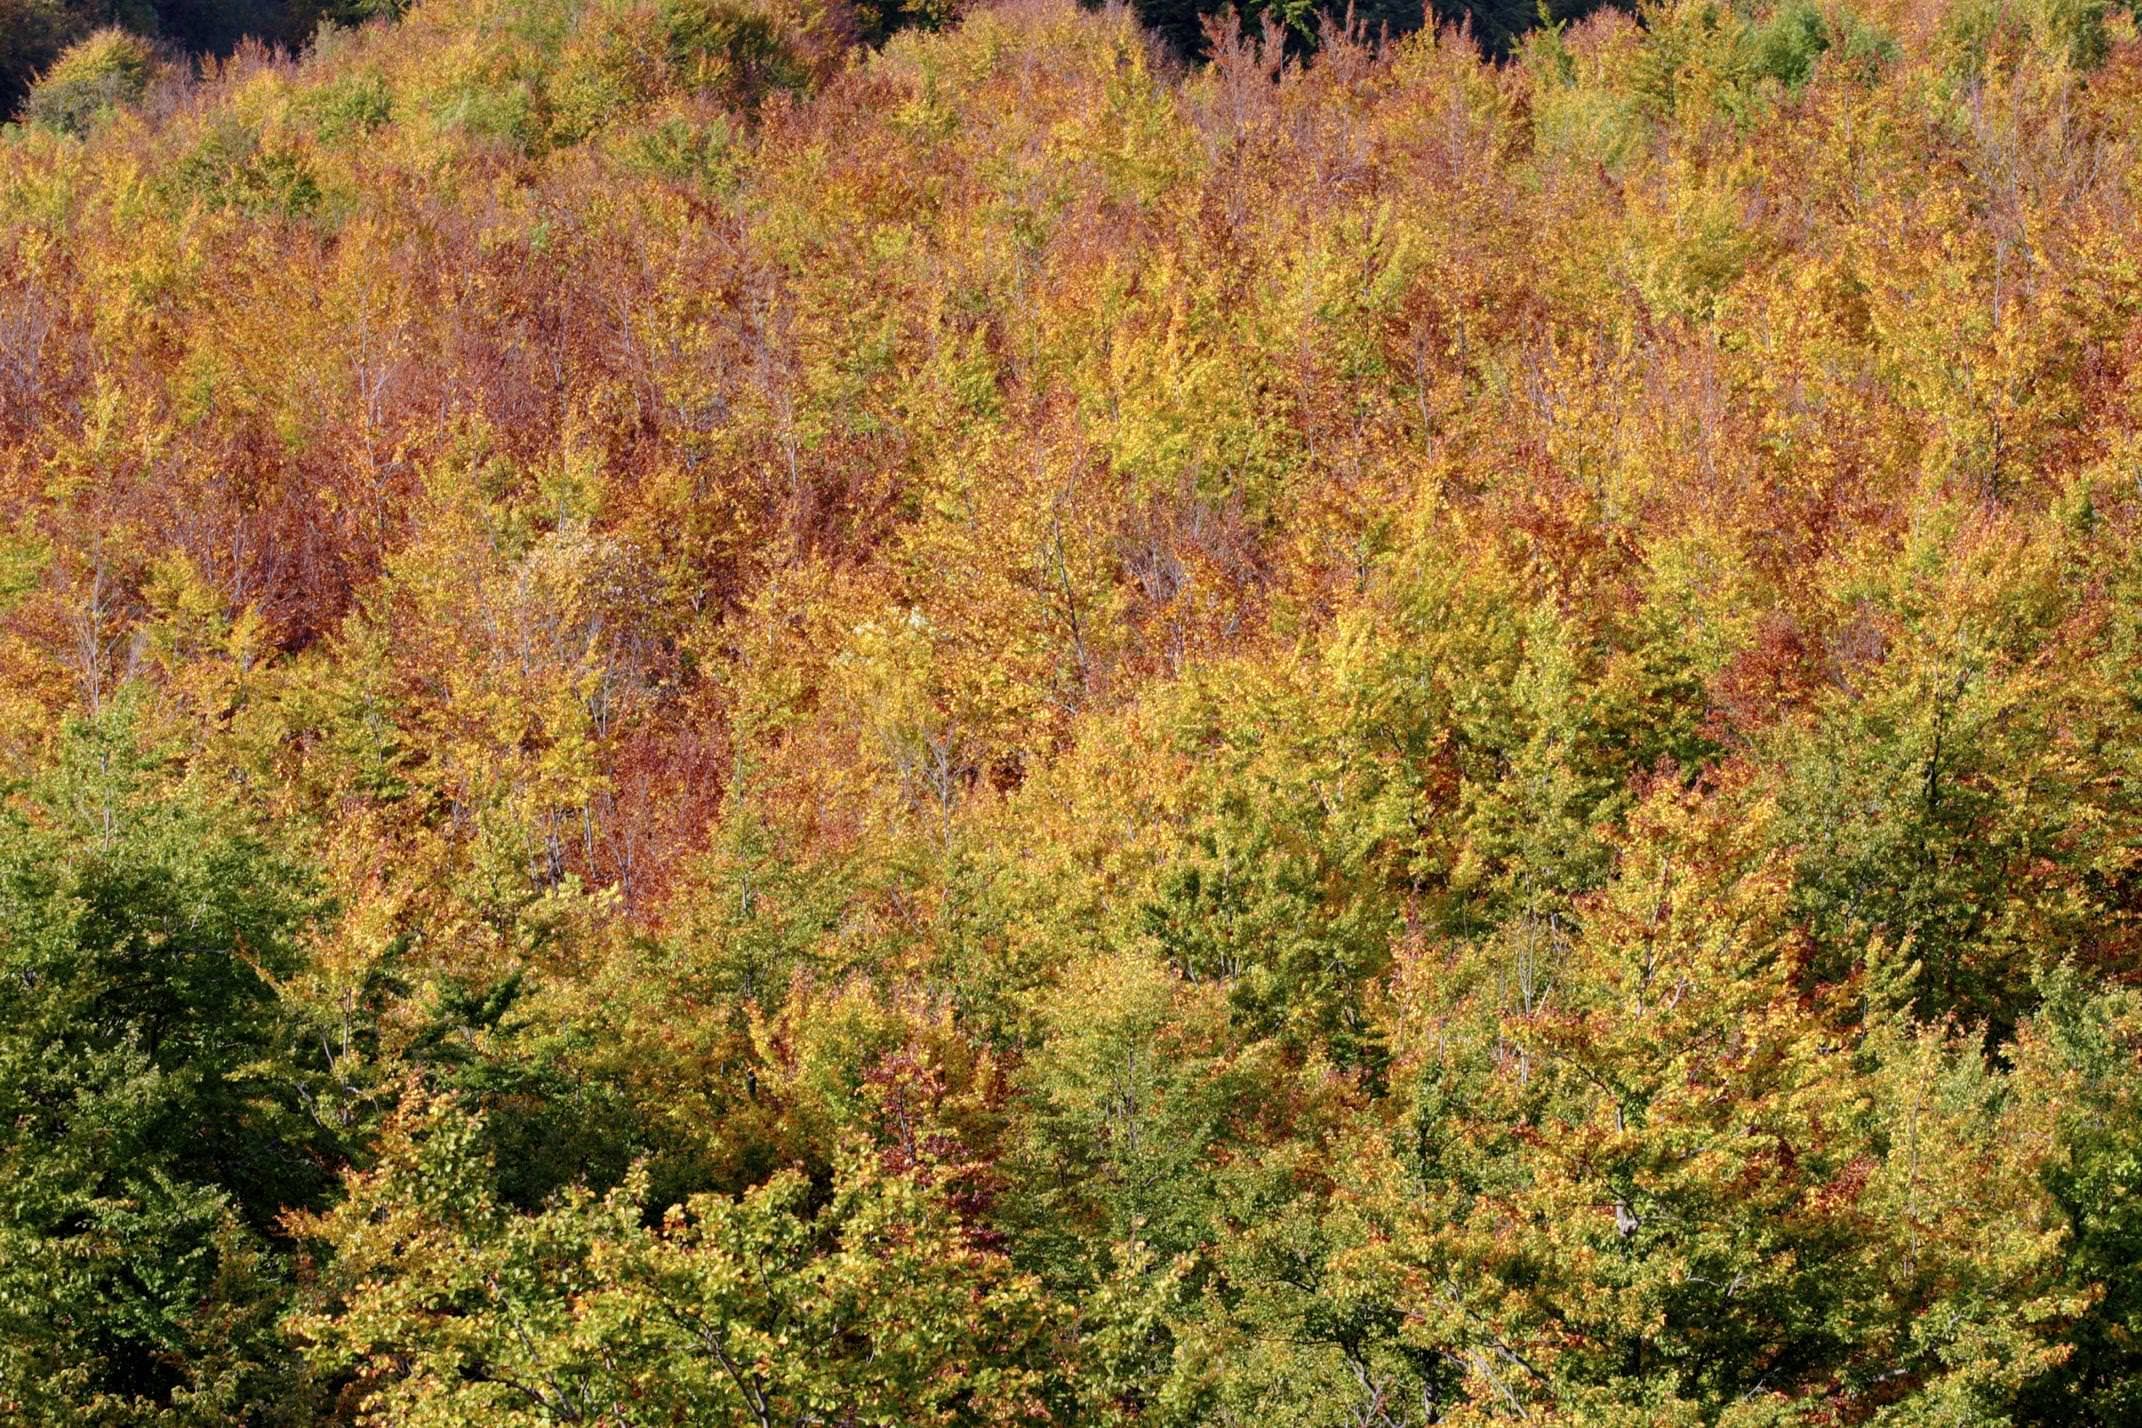 Spain picos de europa autumn trees close up